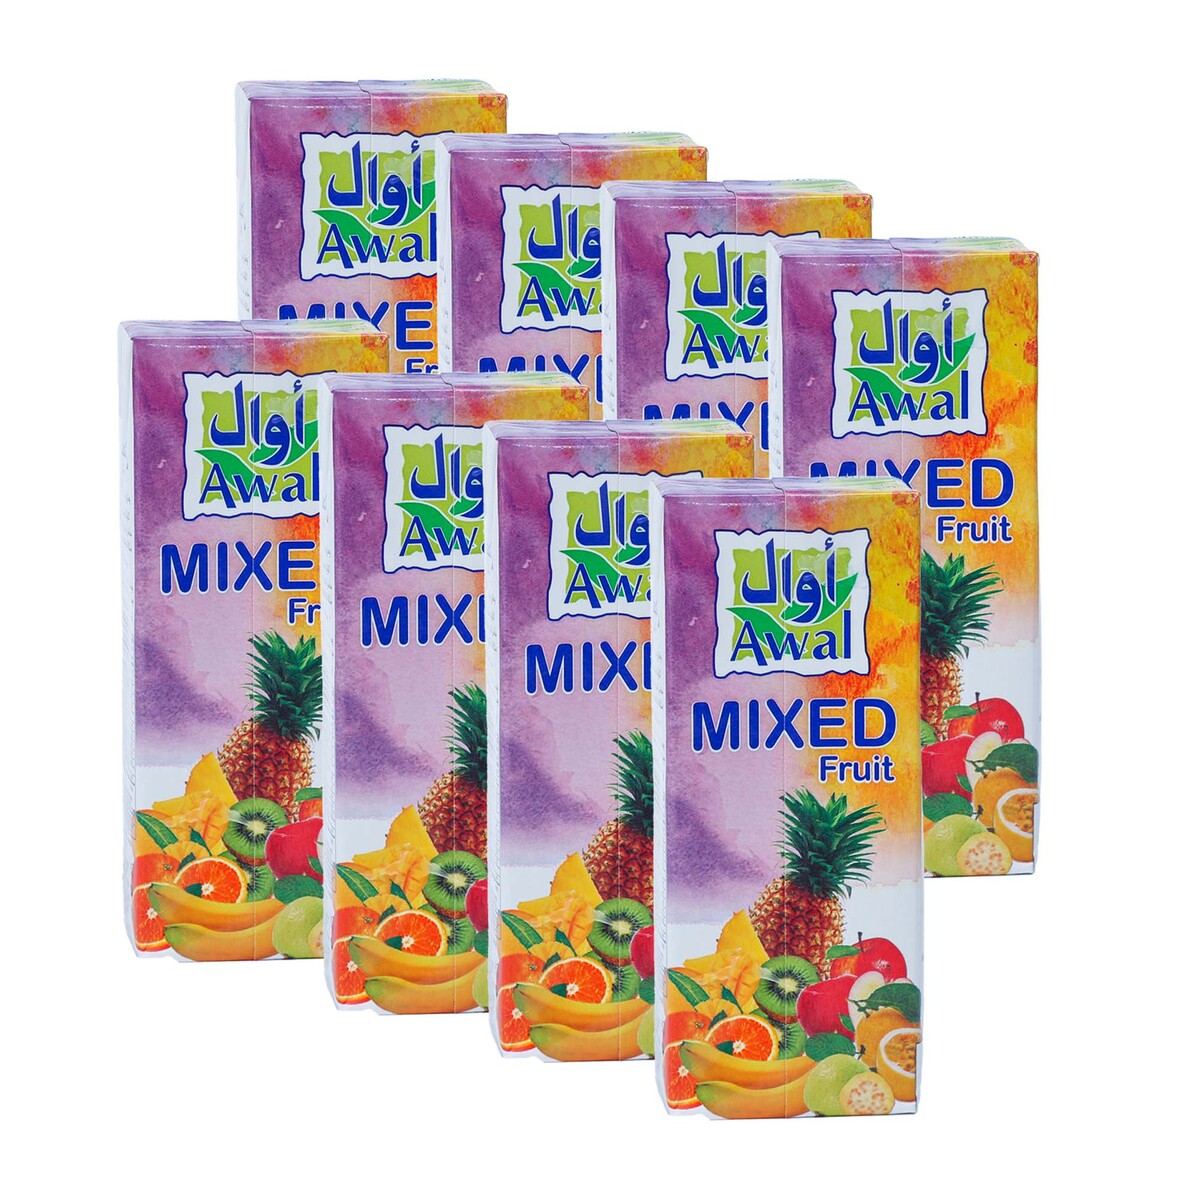 Awal Drink Mixed Fruit 200ml